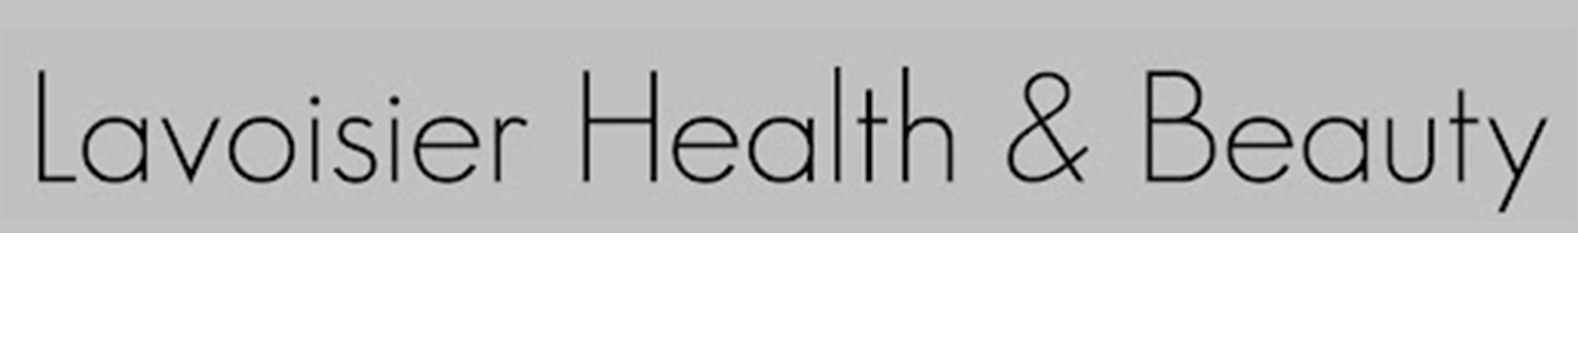 lavoisierhealth-logo-new